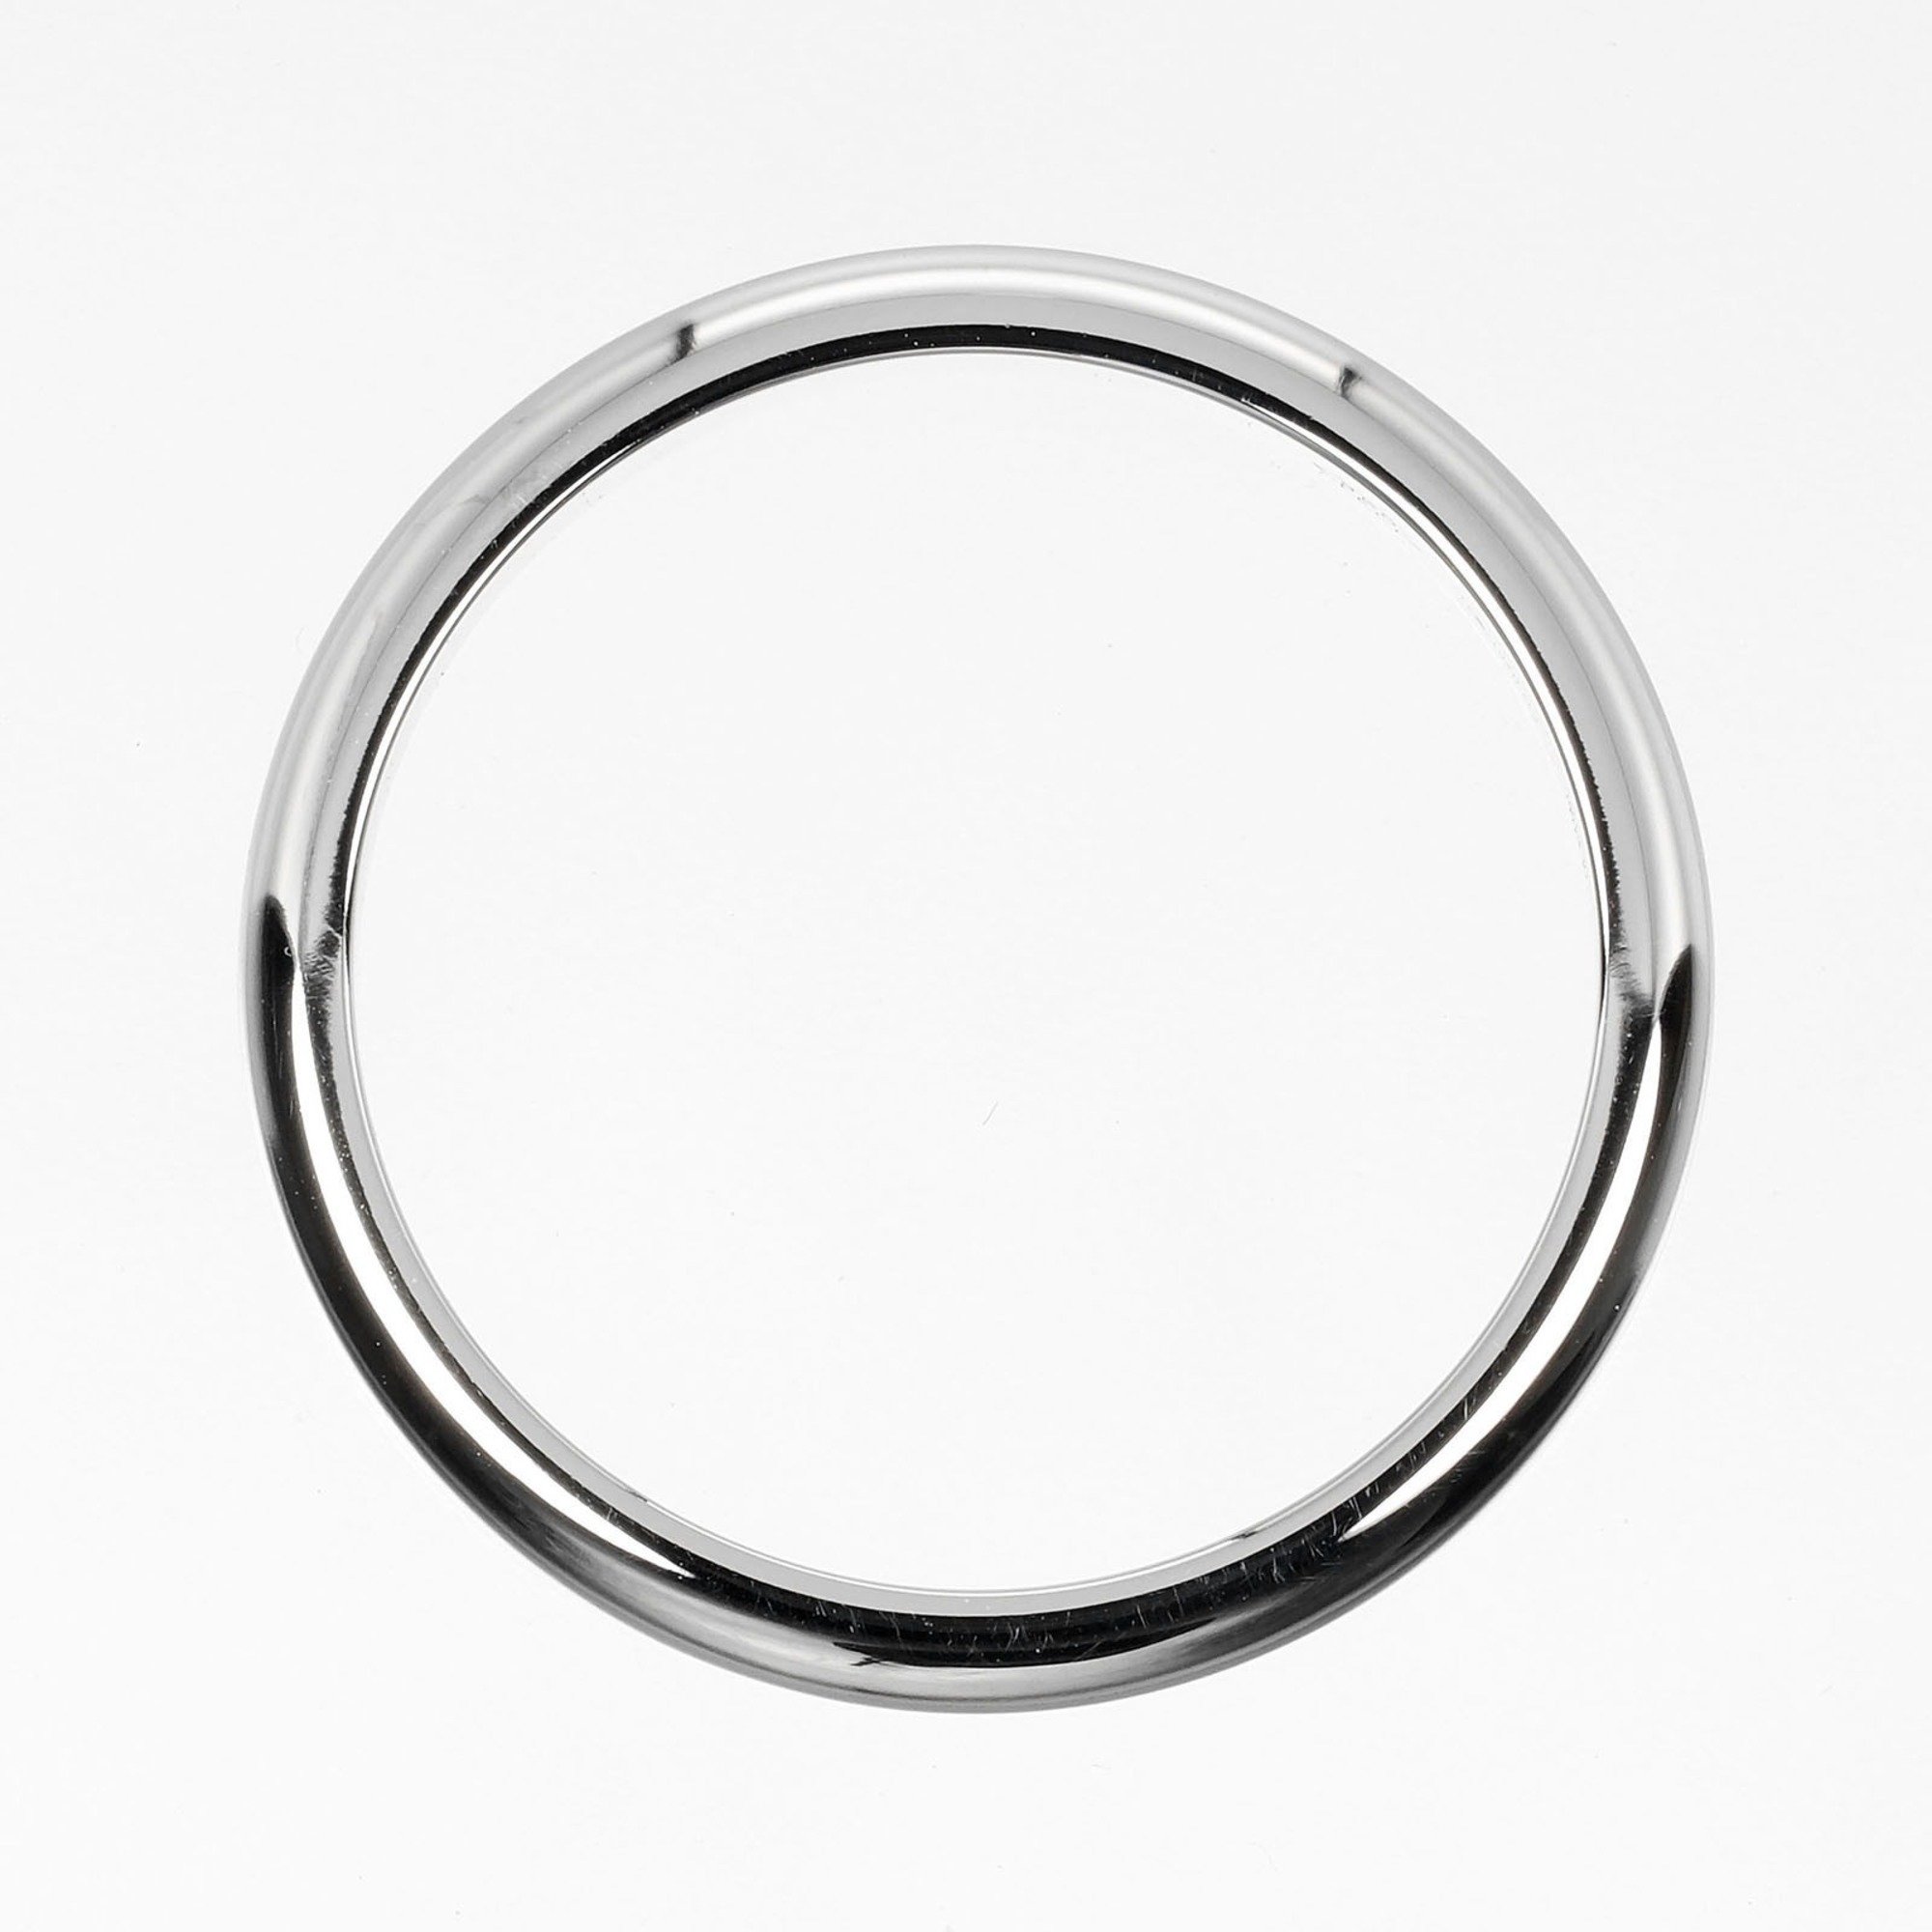 BVLGARI Fedi Wedding Ring, Size 17, Pt950 Platinum, Approx. 5.06g I132124036